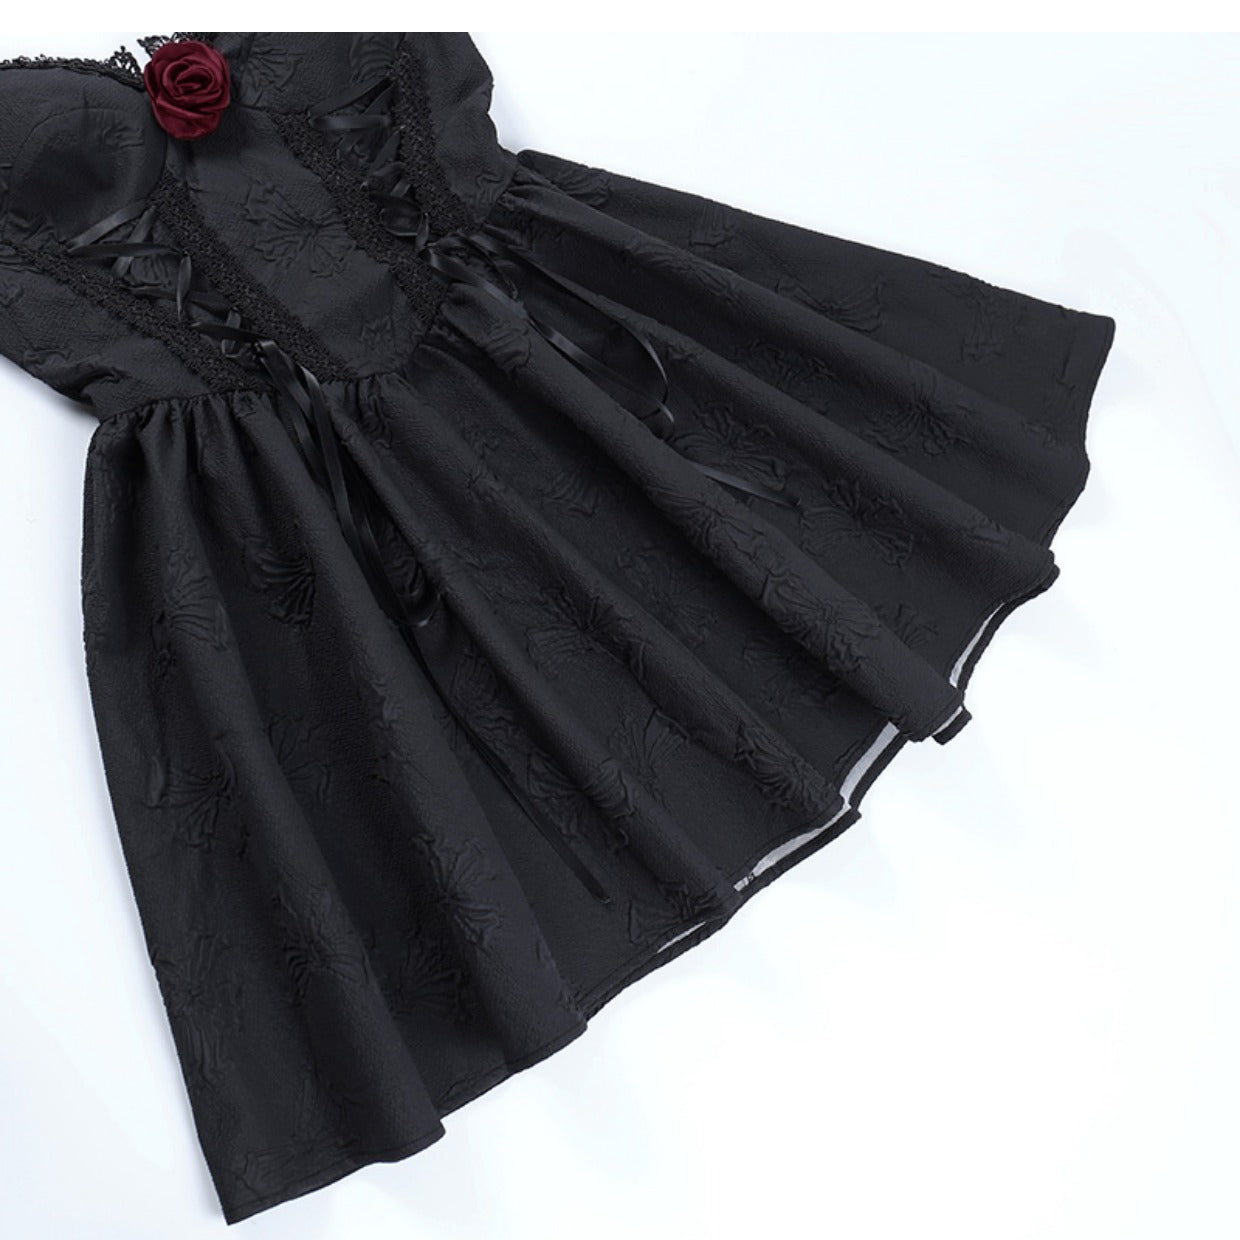 A woman in a Rose Dark Jacquard Ladies Slip Dress by Maramalive™.